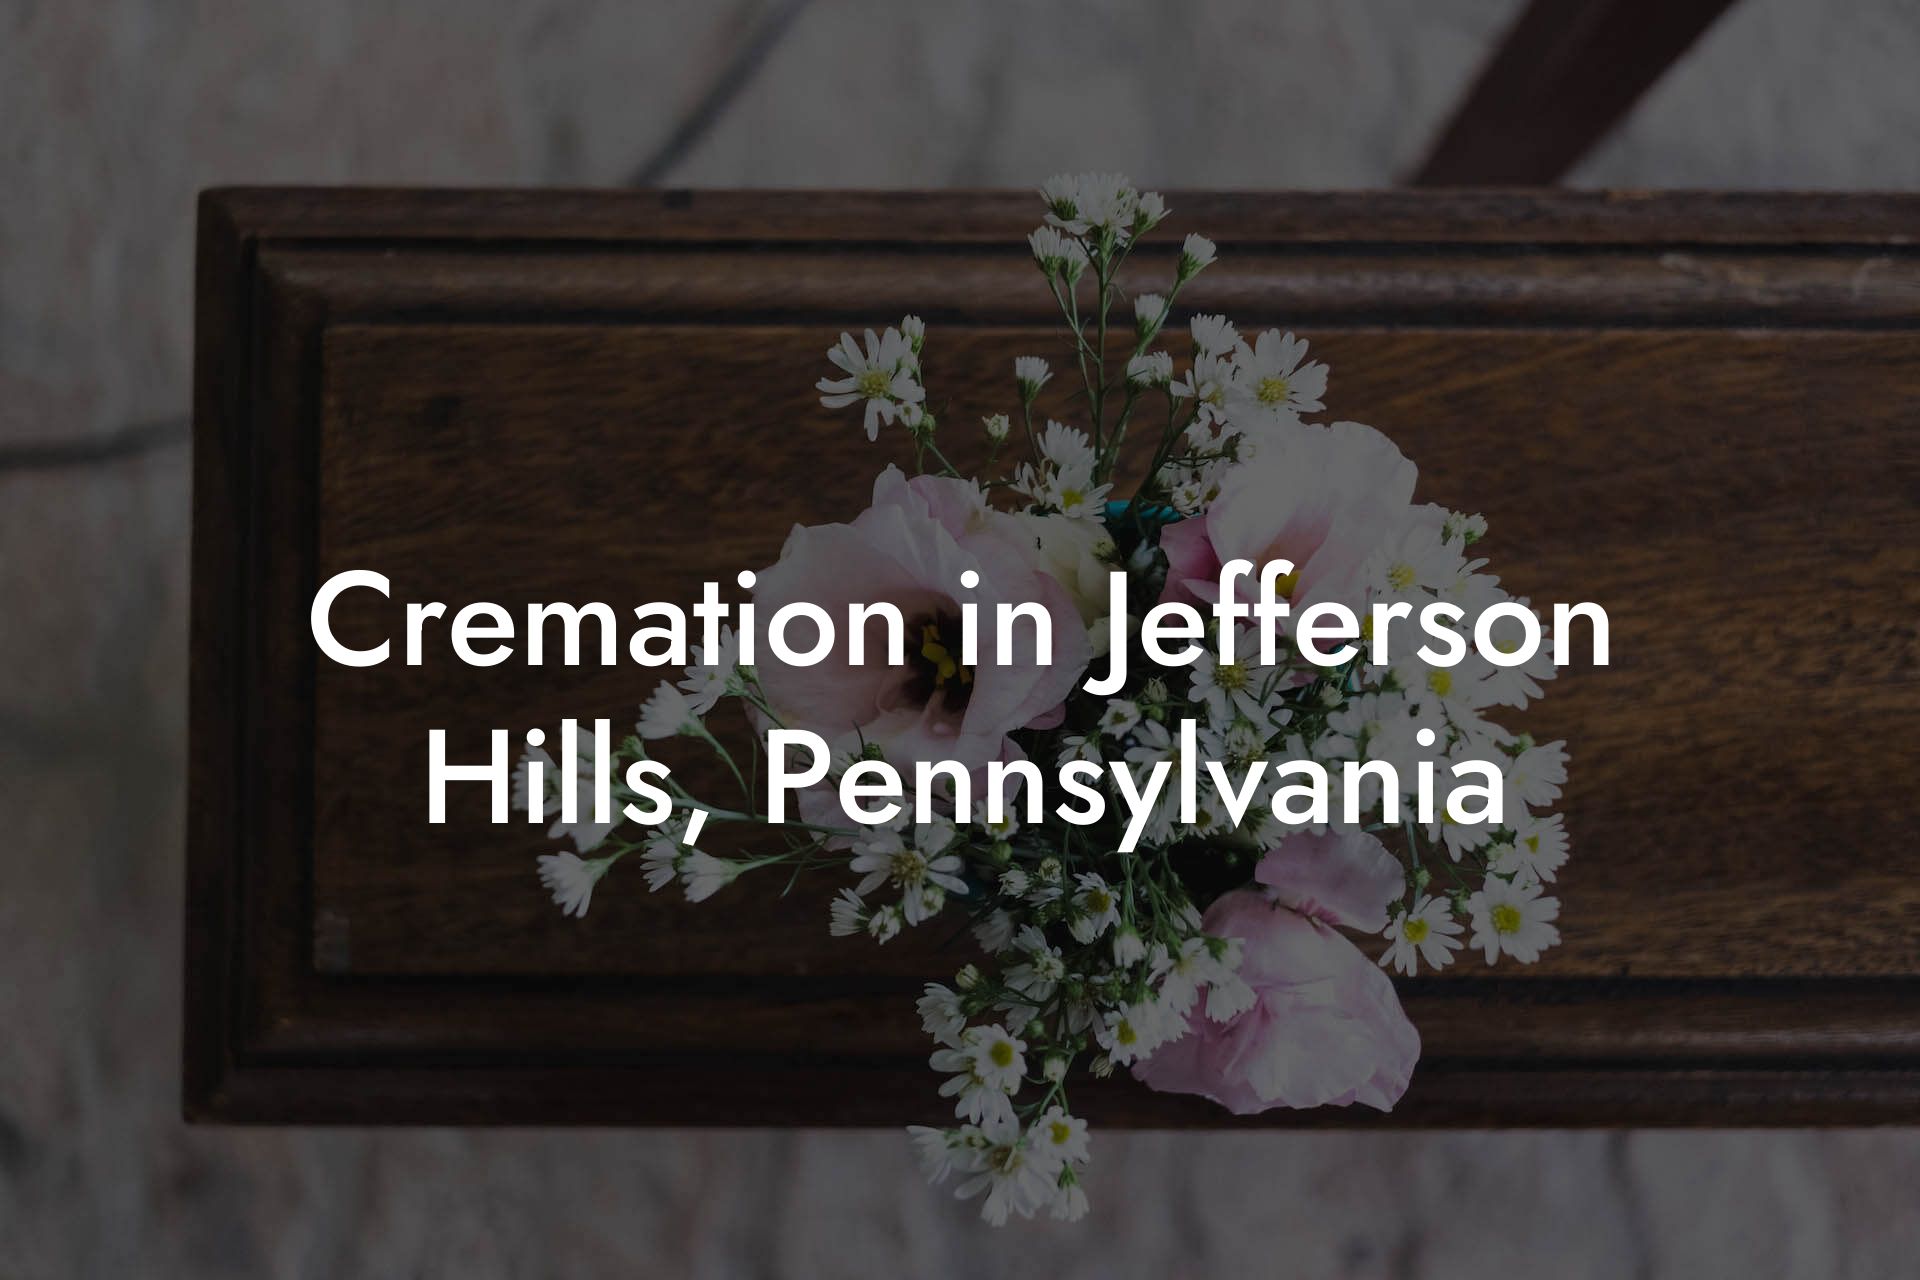 Cremation in Jefferson Hills, Pennsylvania